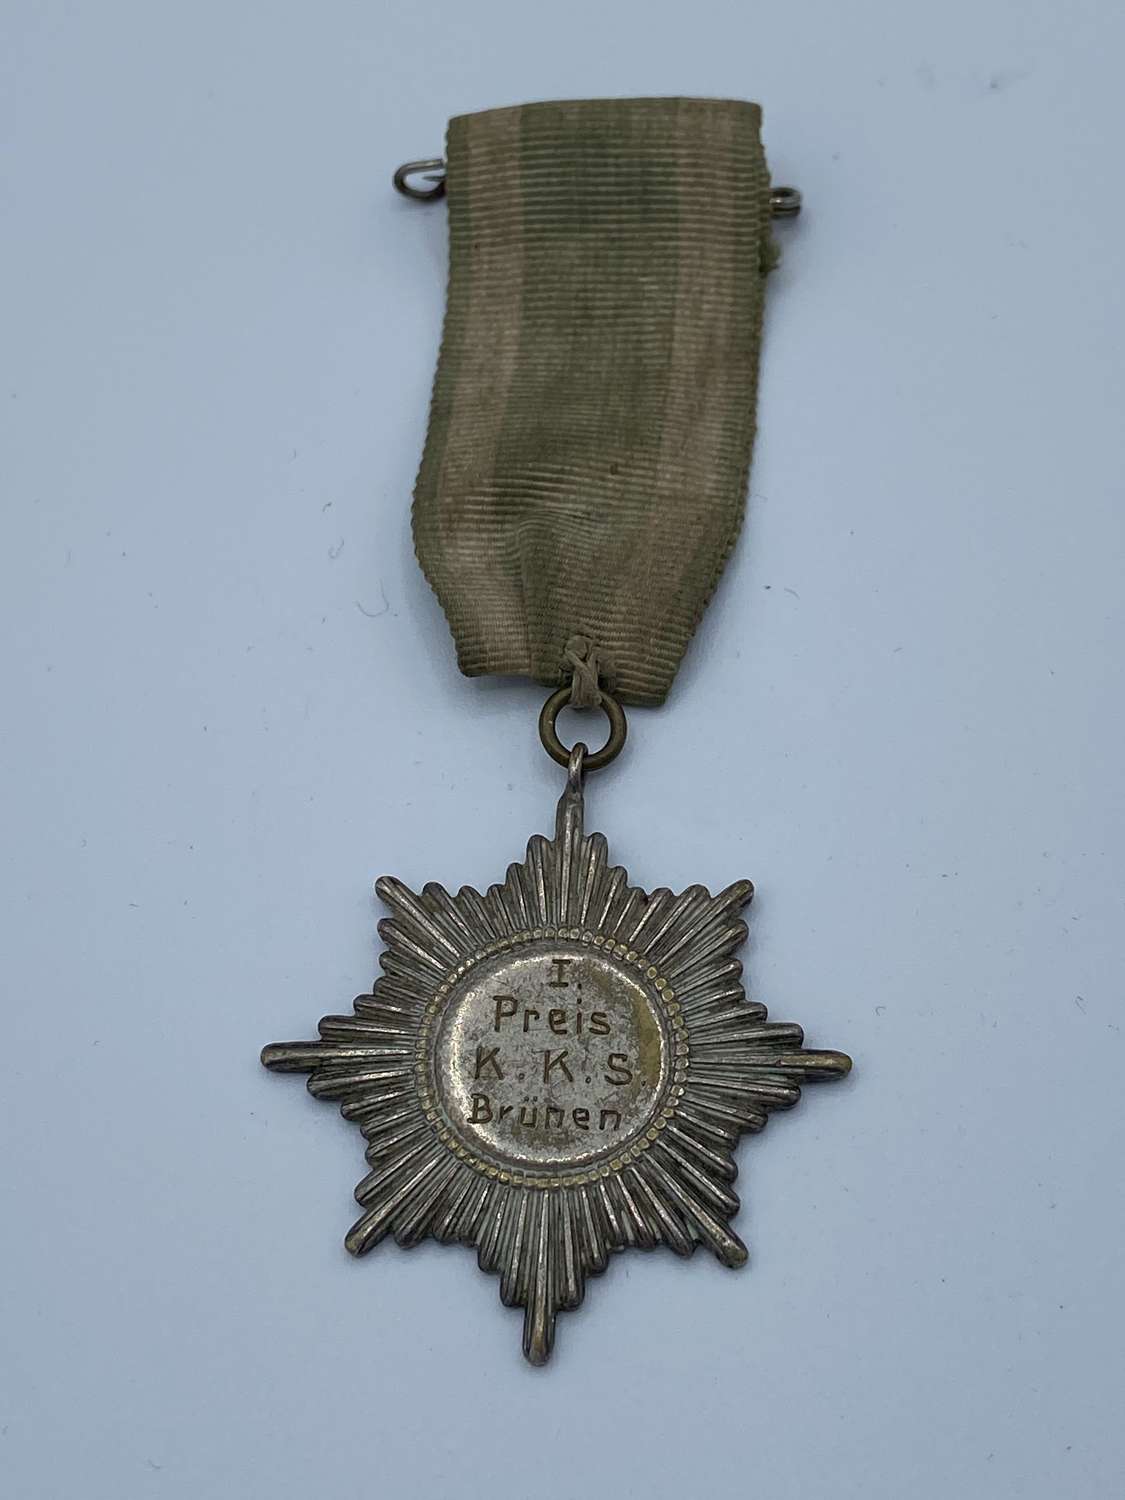 Pre WW1 German 1st Prize Shooting Silver Medal To K.K.S